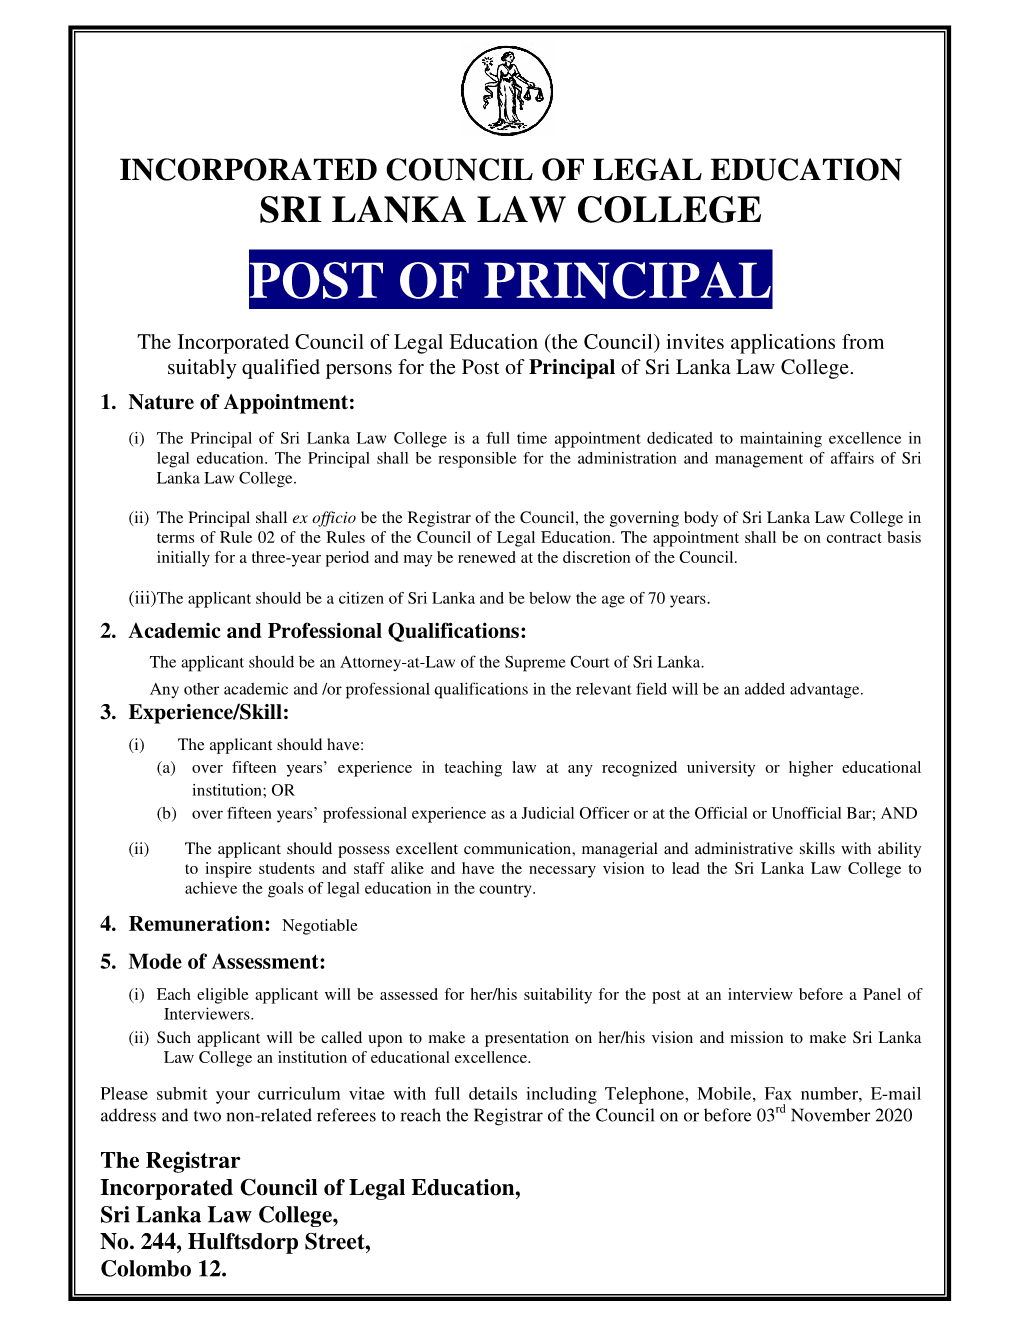 Sri Lanka Law College Post of Principal